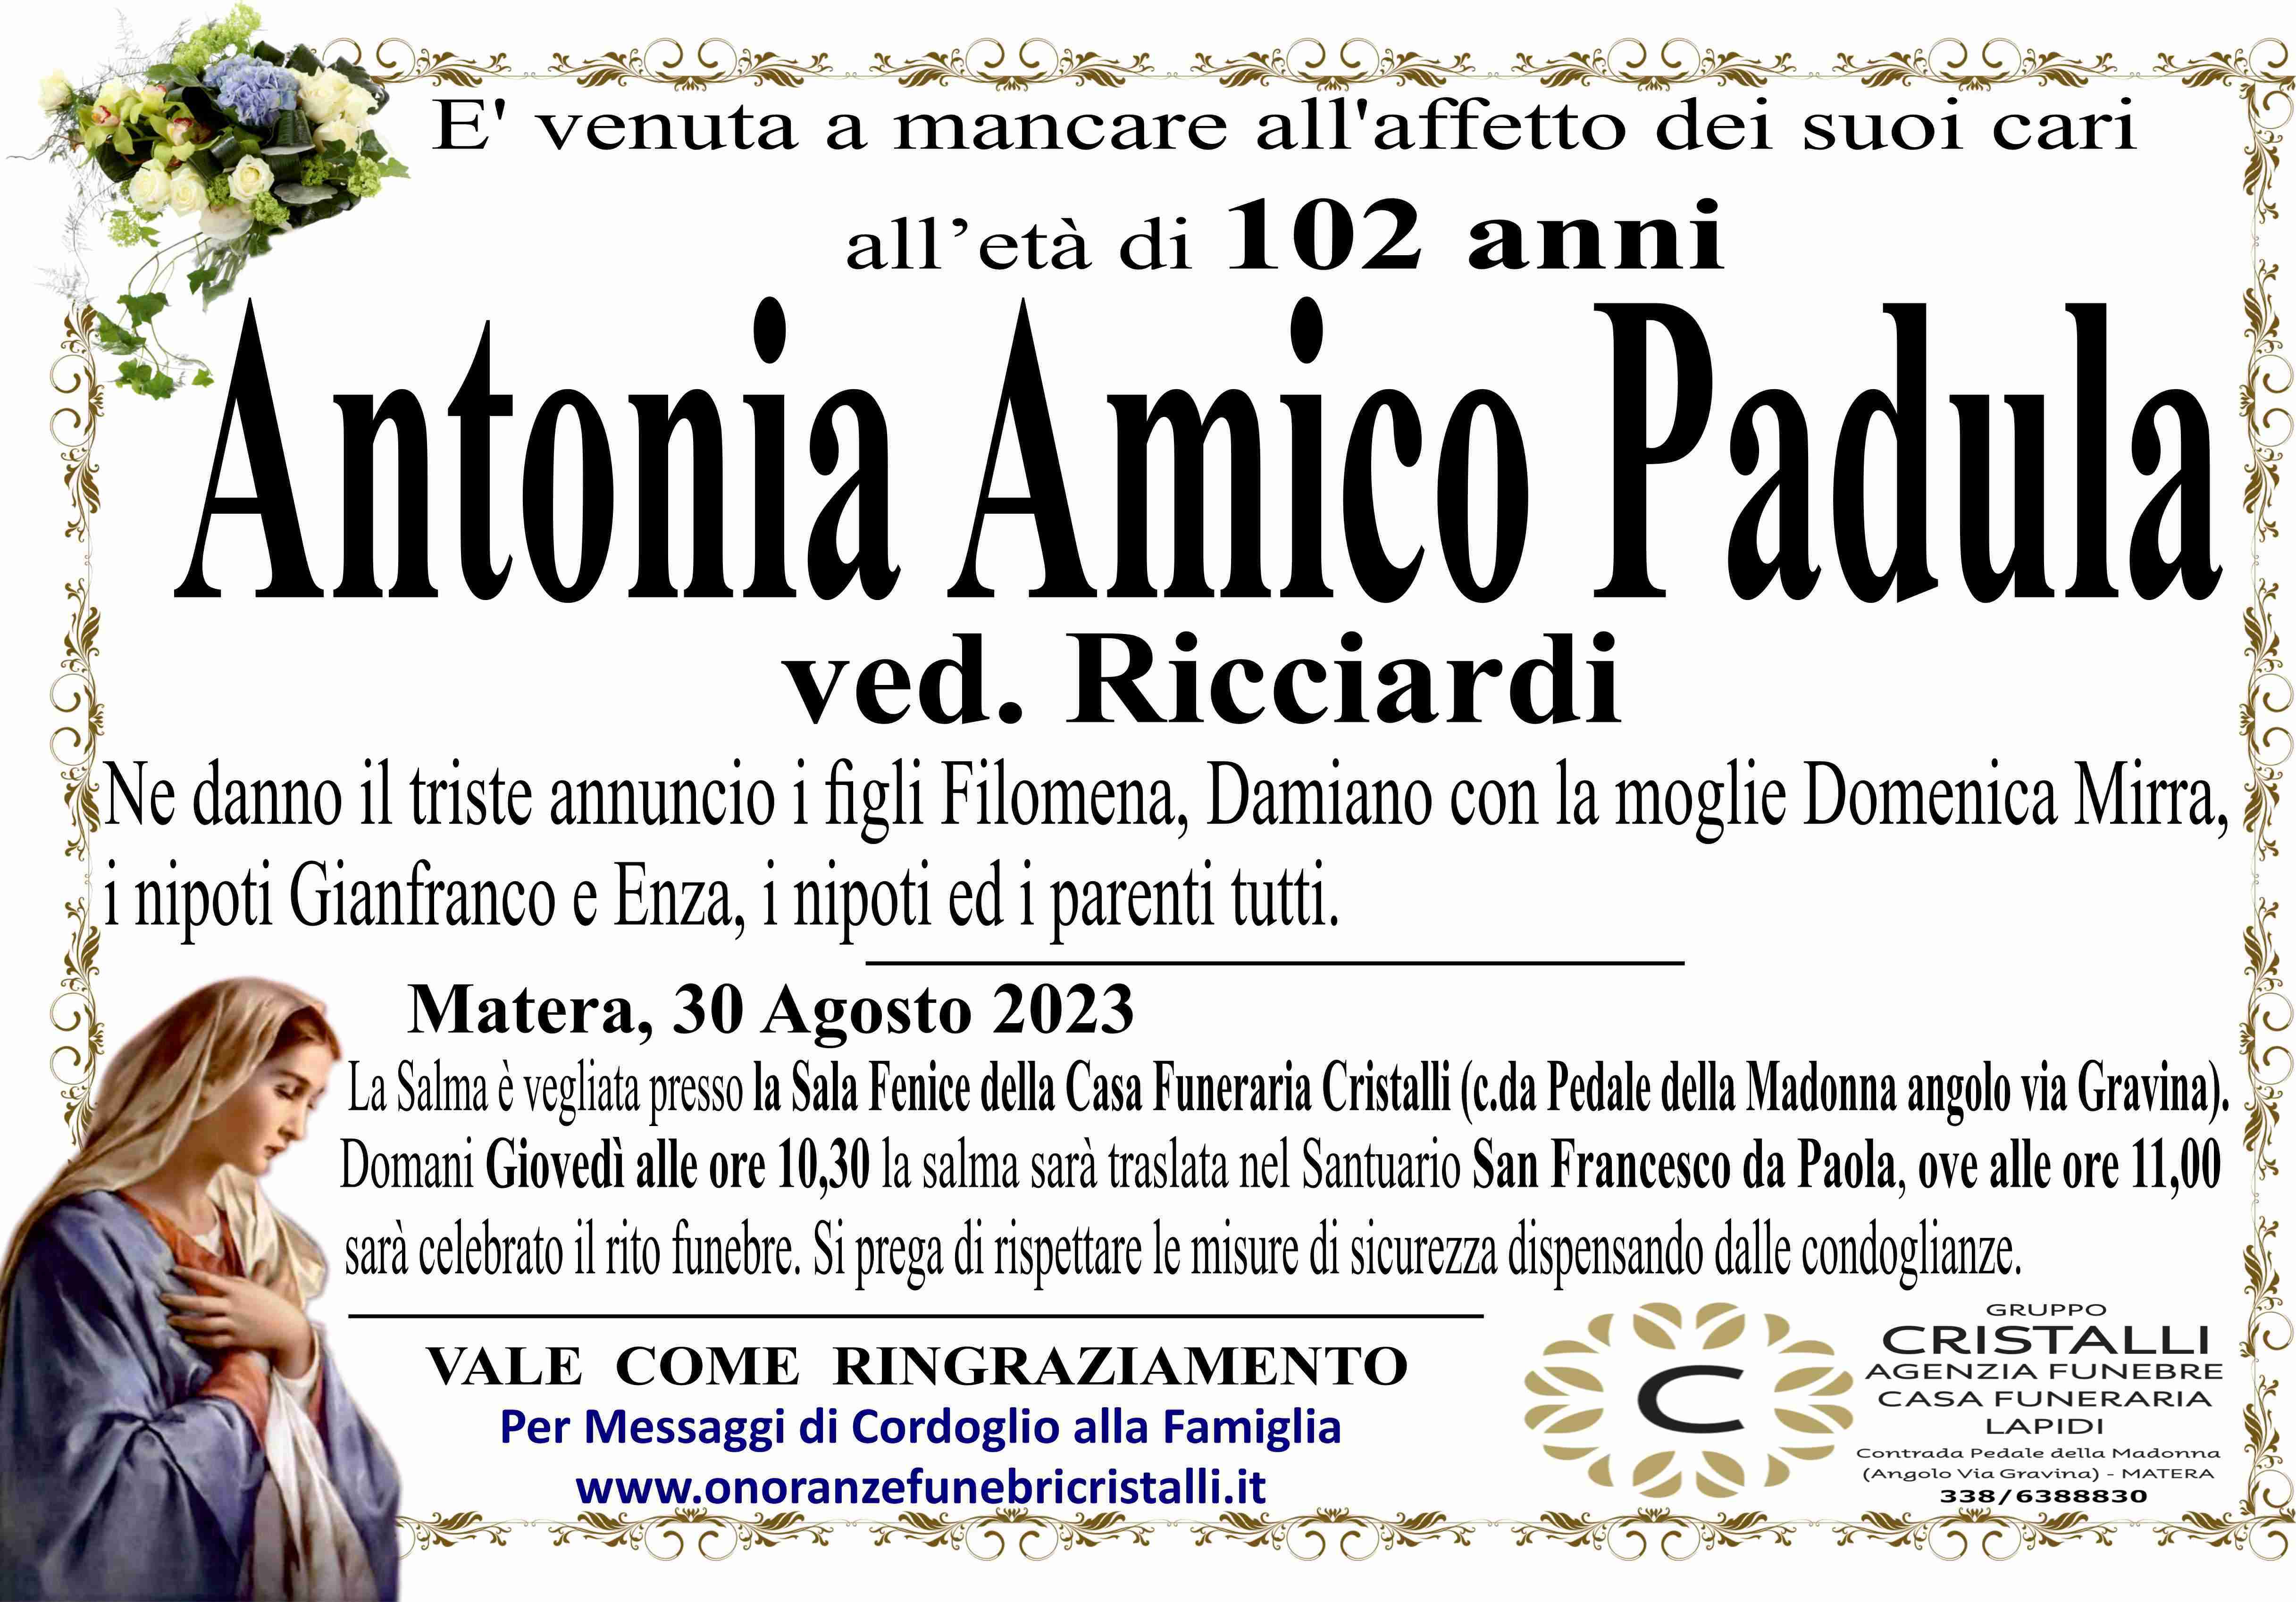 Antonia Amico Padula